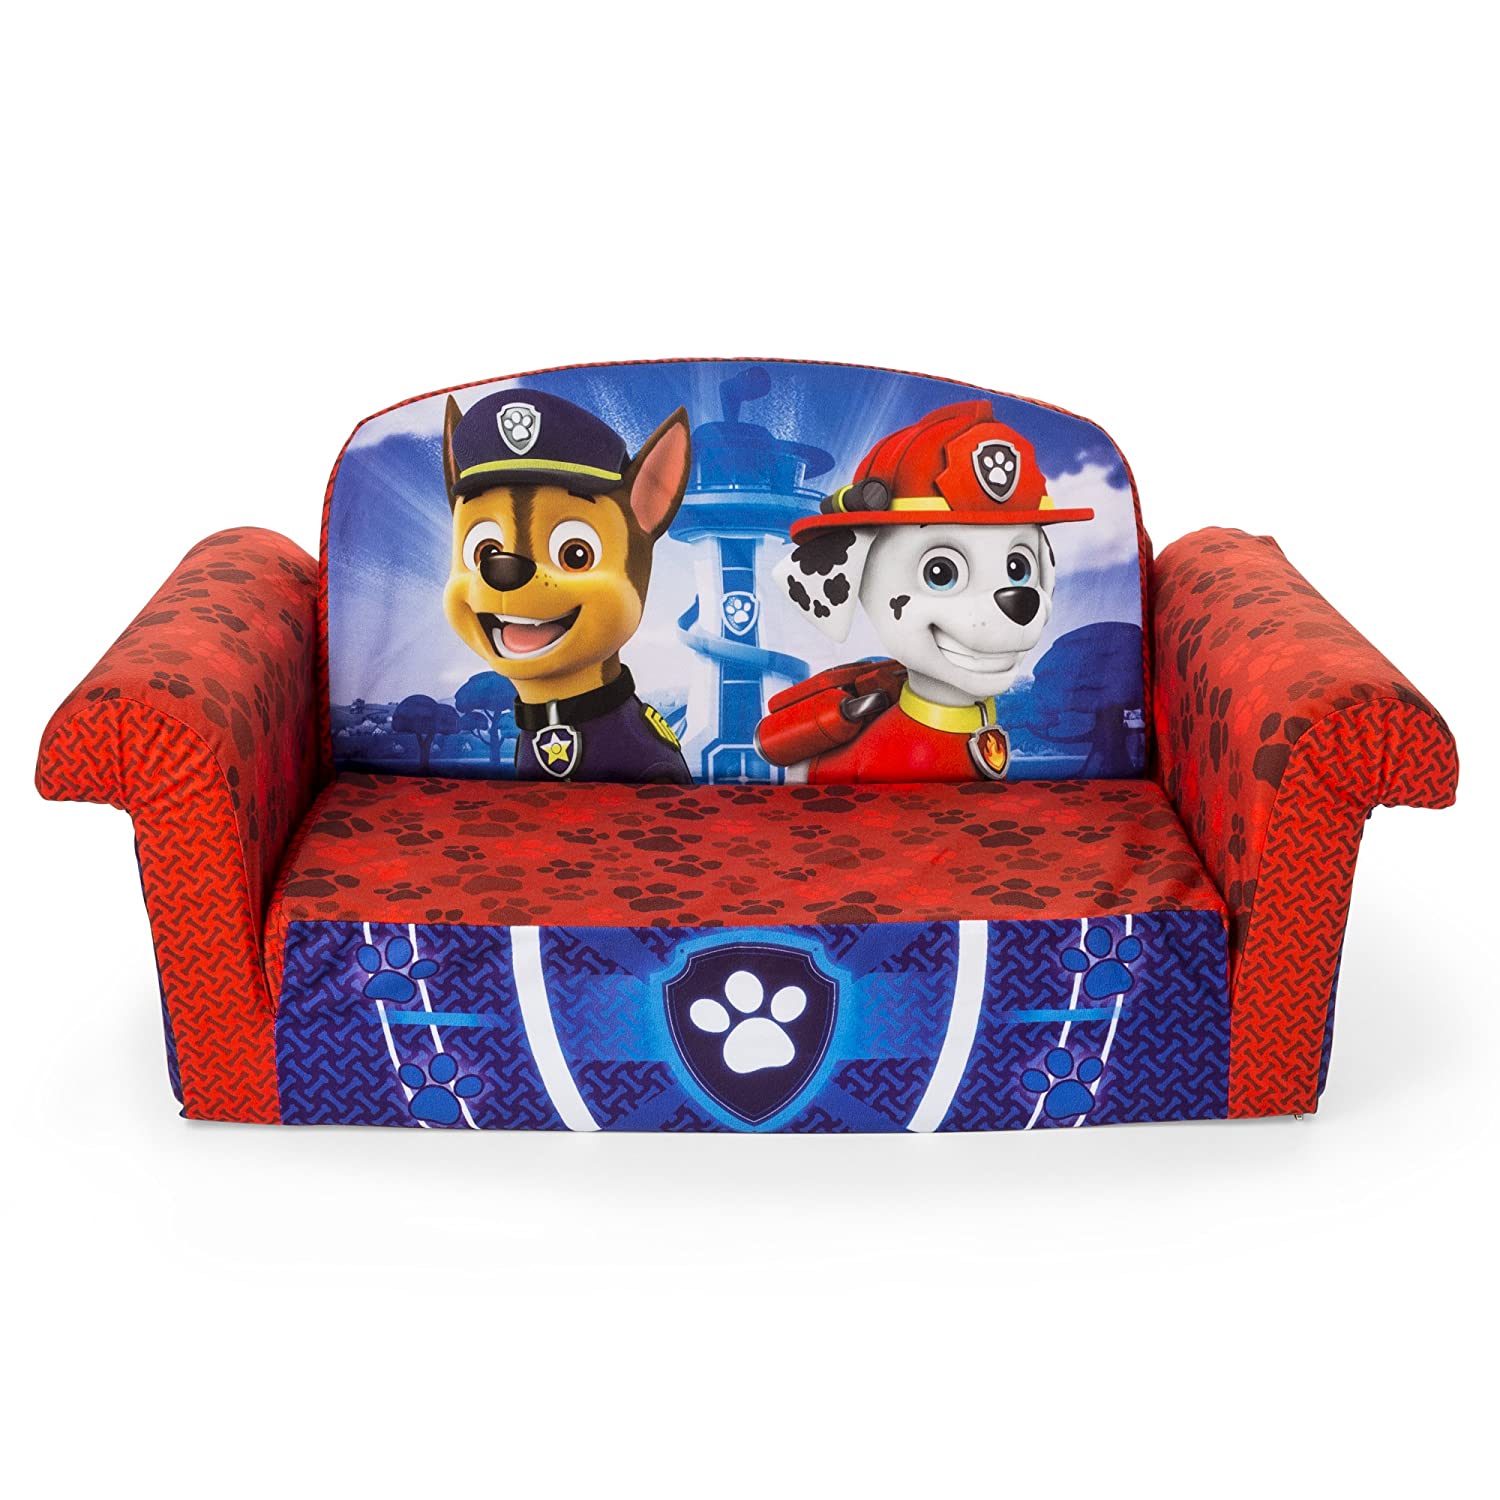 Marshmallow Furniture, Children's 2 In 1 Flip Open Foam Sofa, Nickelodeon Paw Patrol, by Spin Master